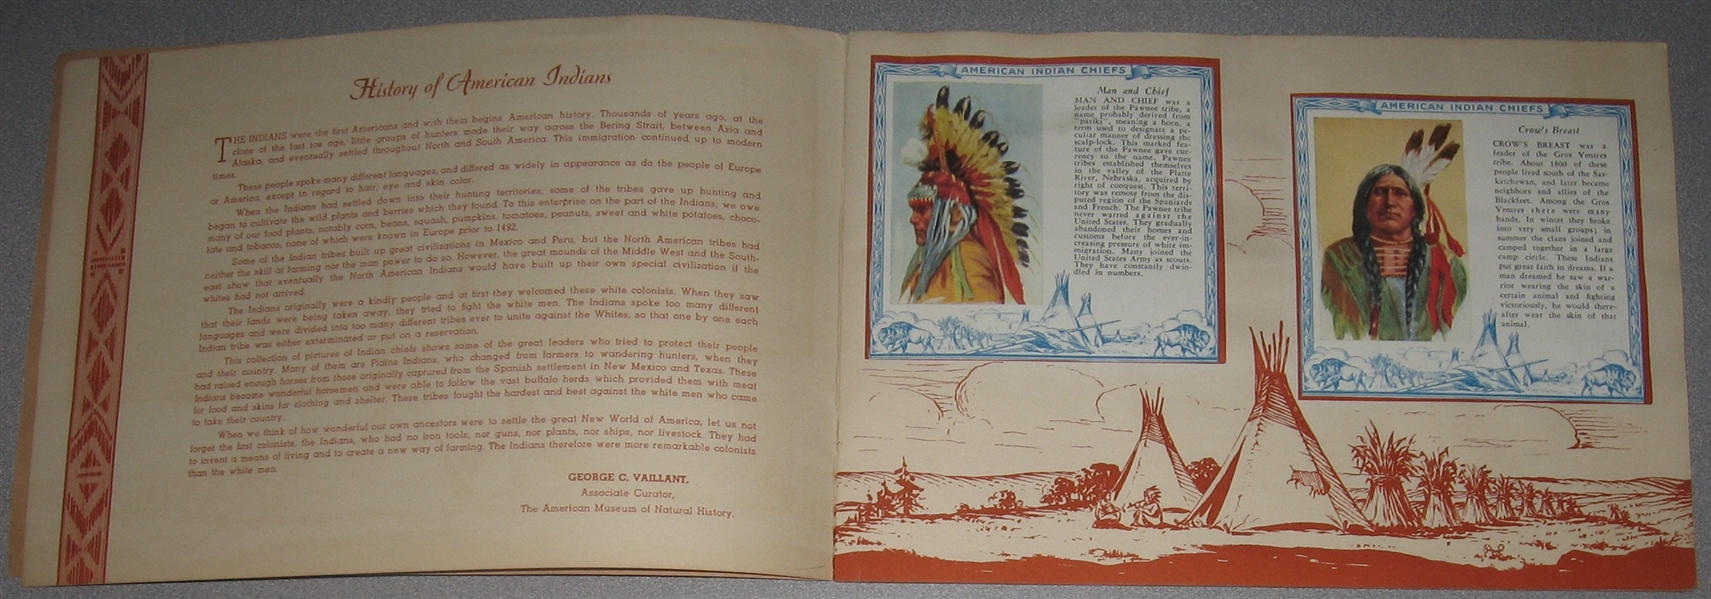 1930s American Indian Chiefs Sticker Album Complete